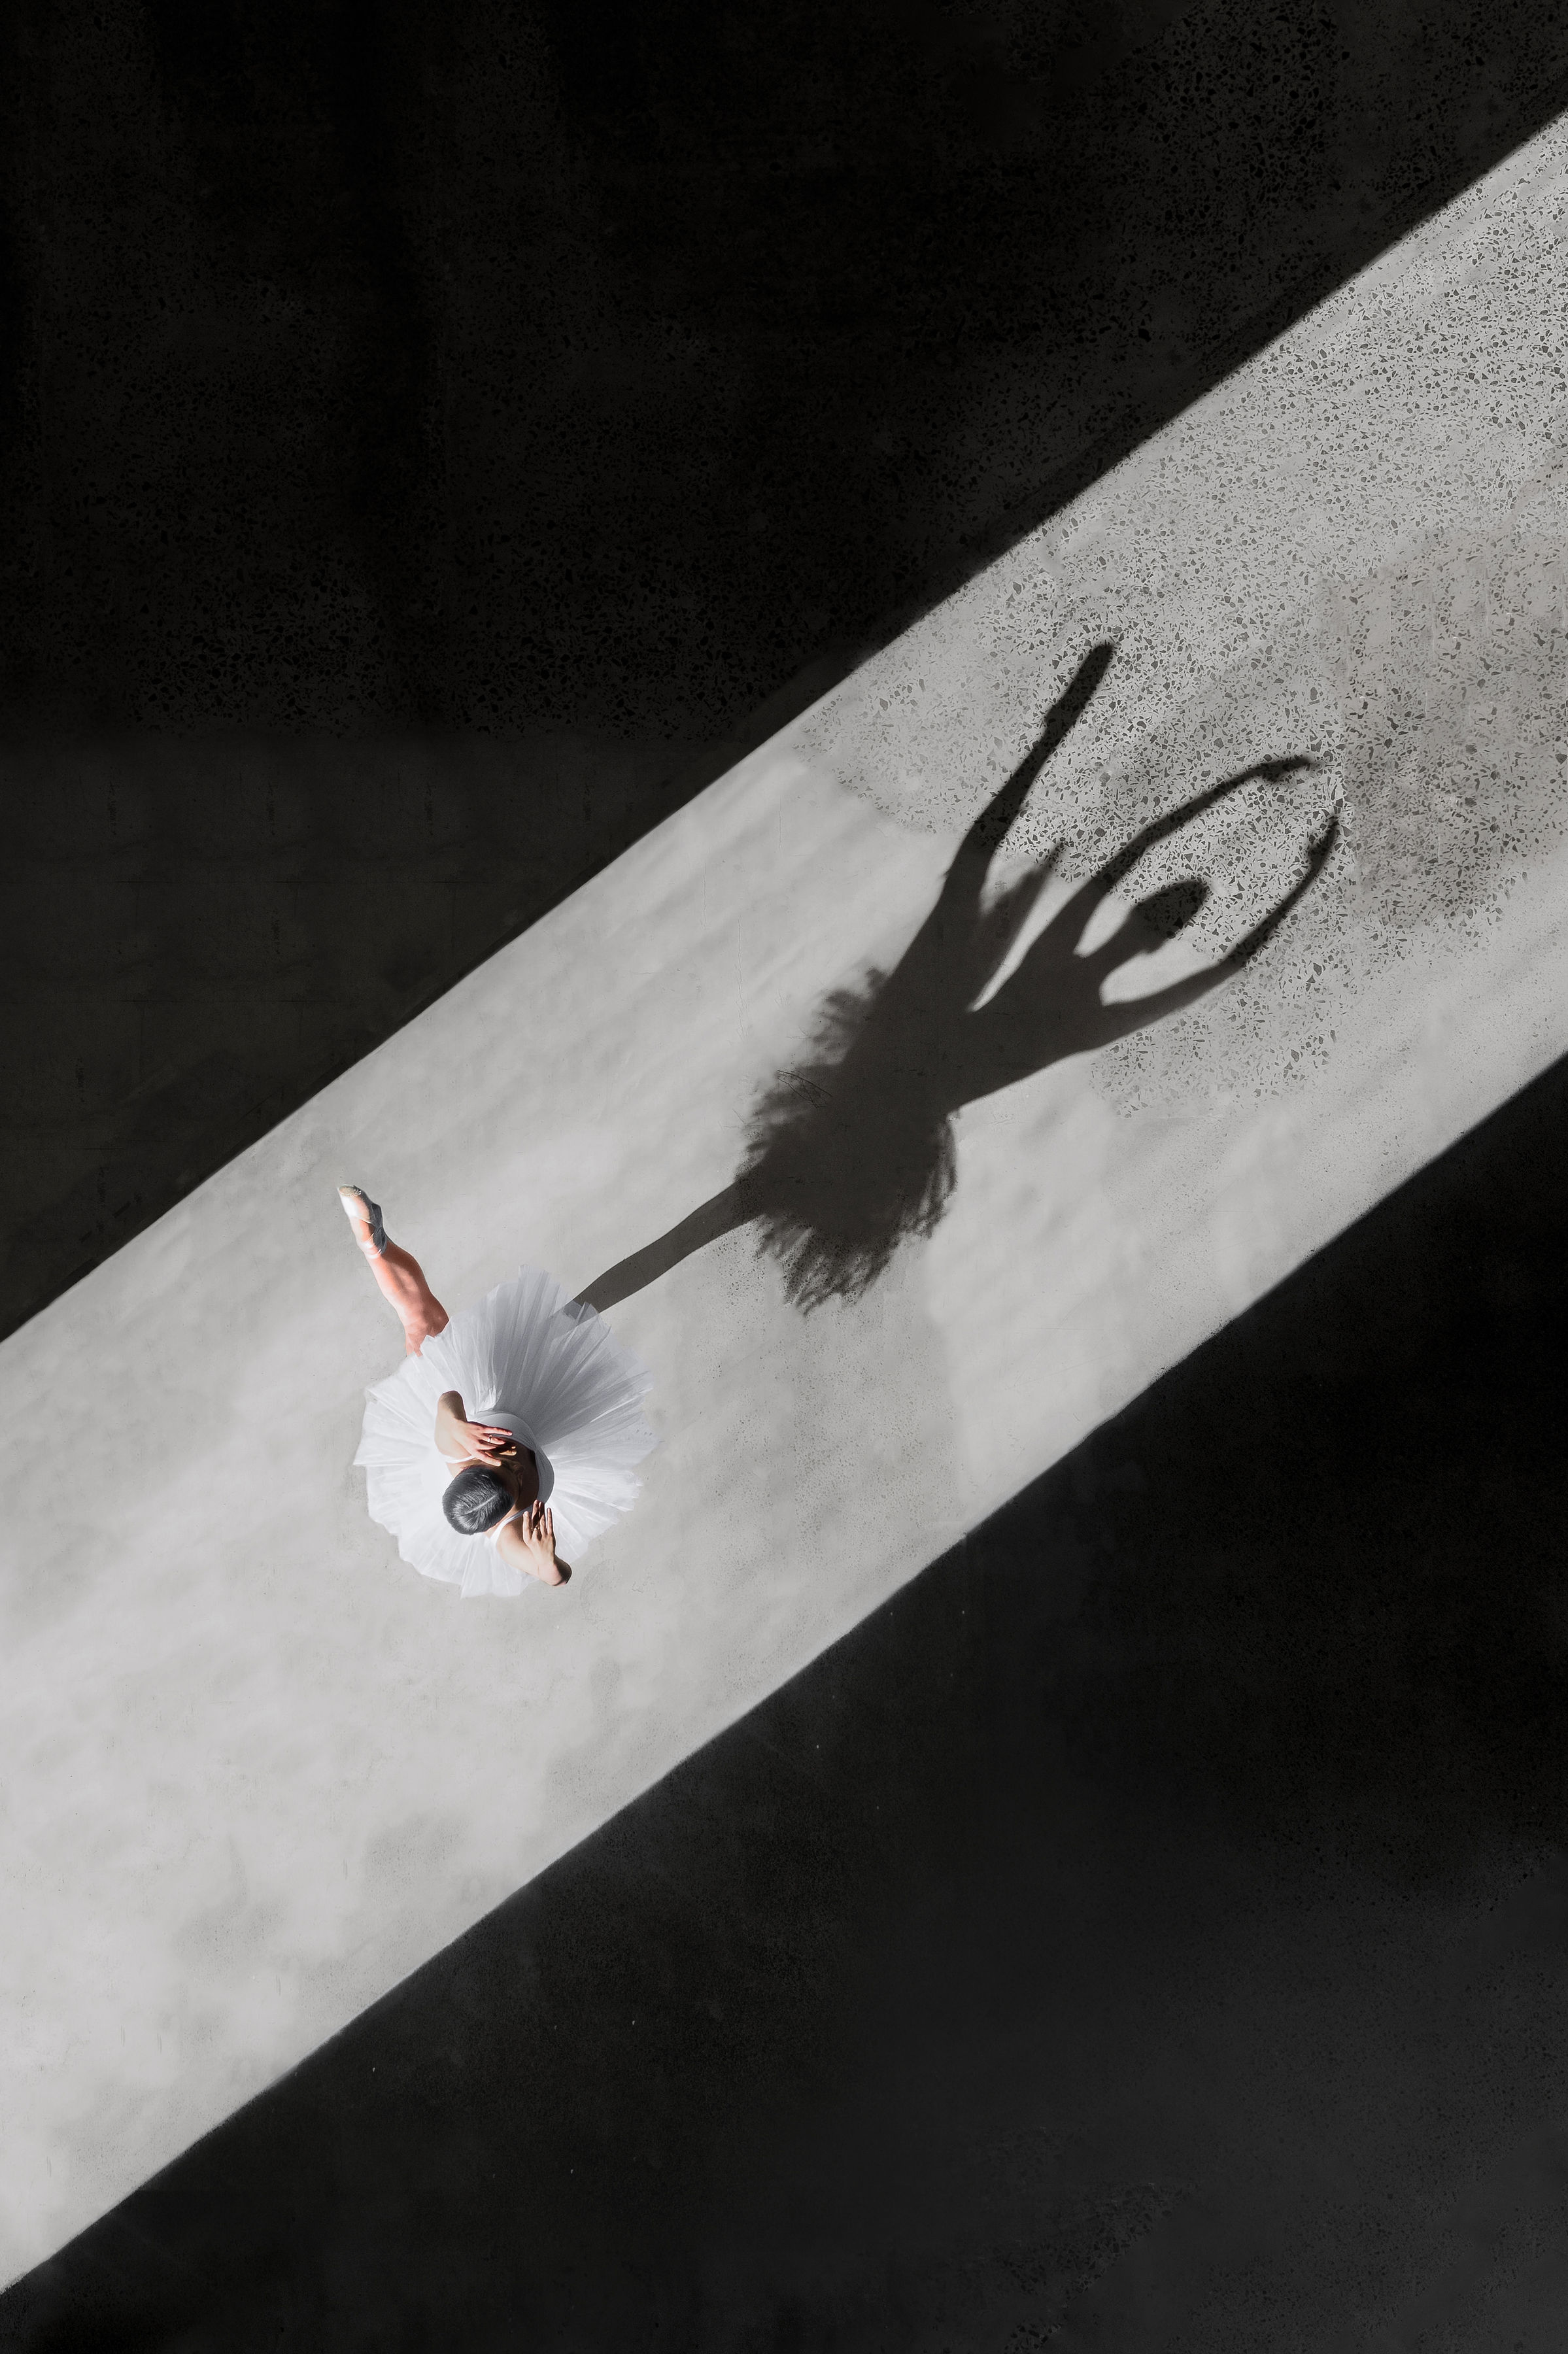 Brad Walls Uses a Drone to Create Unique Photos of Ballerinas